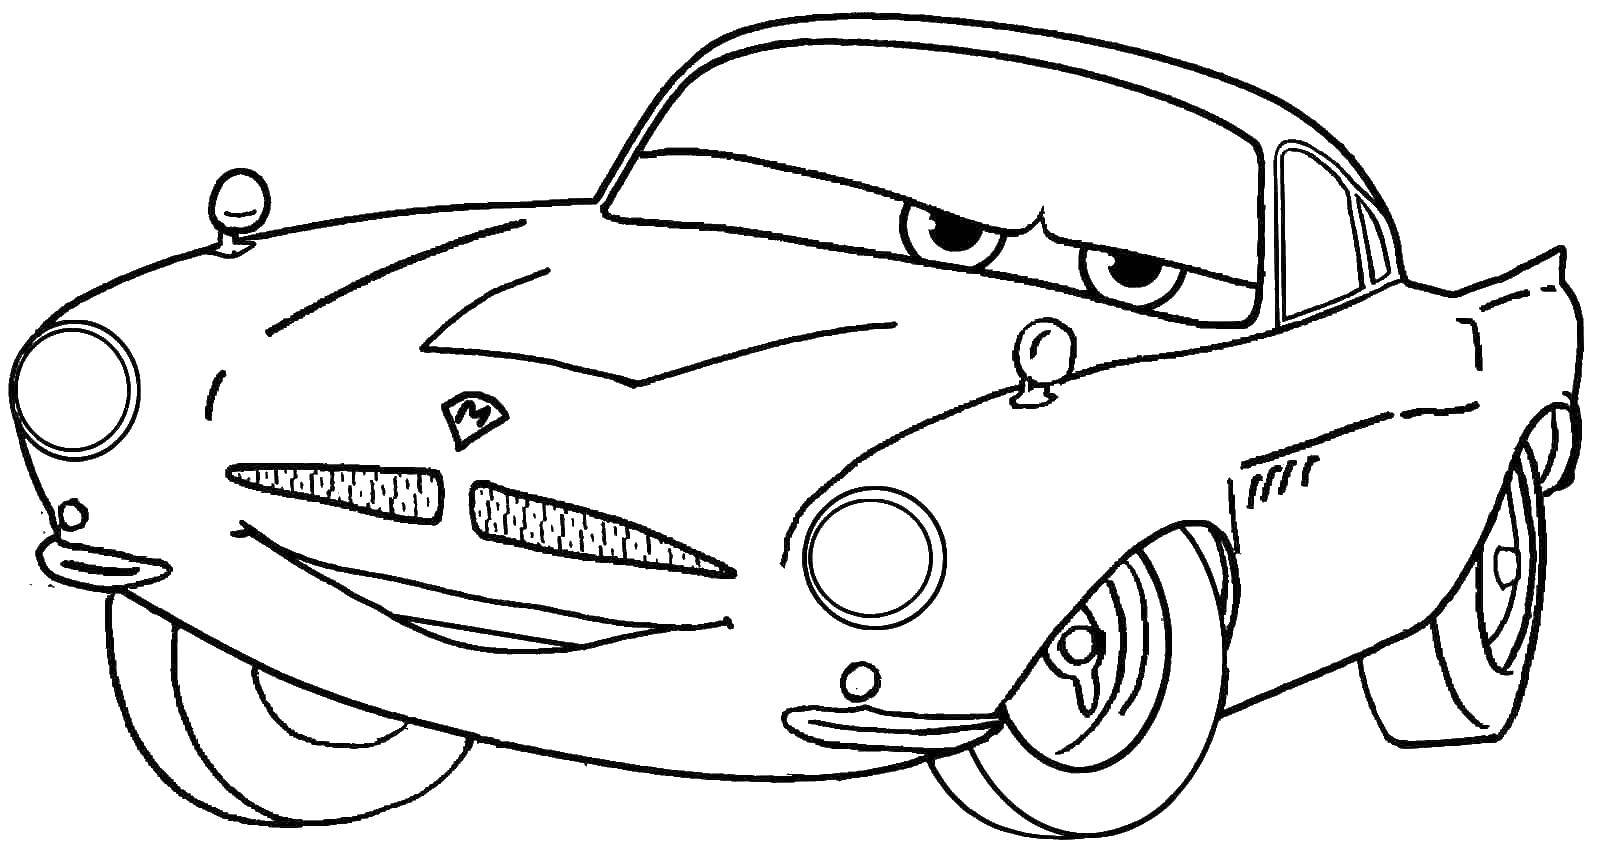 Coloring Cartoon cars . Category Machine . Tags:  cartoon, cars, cars.